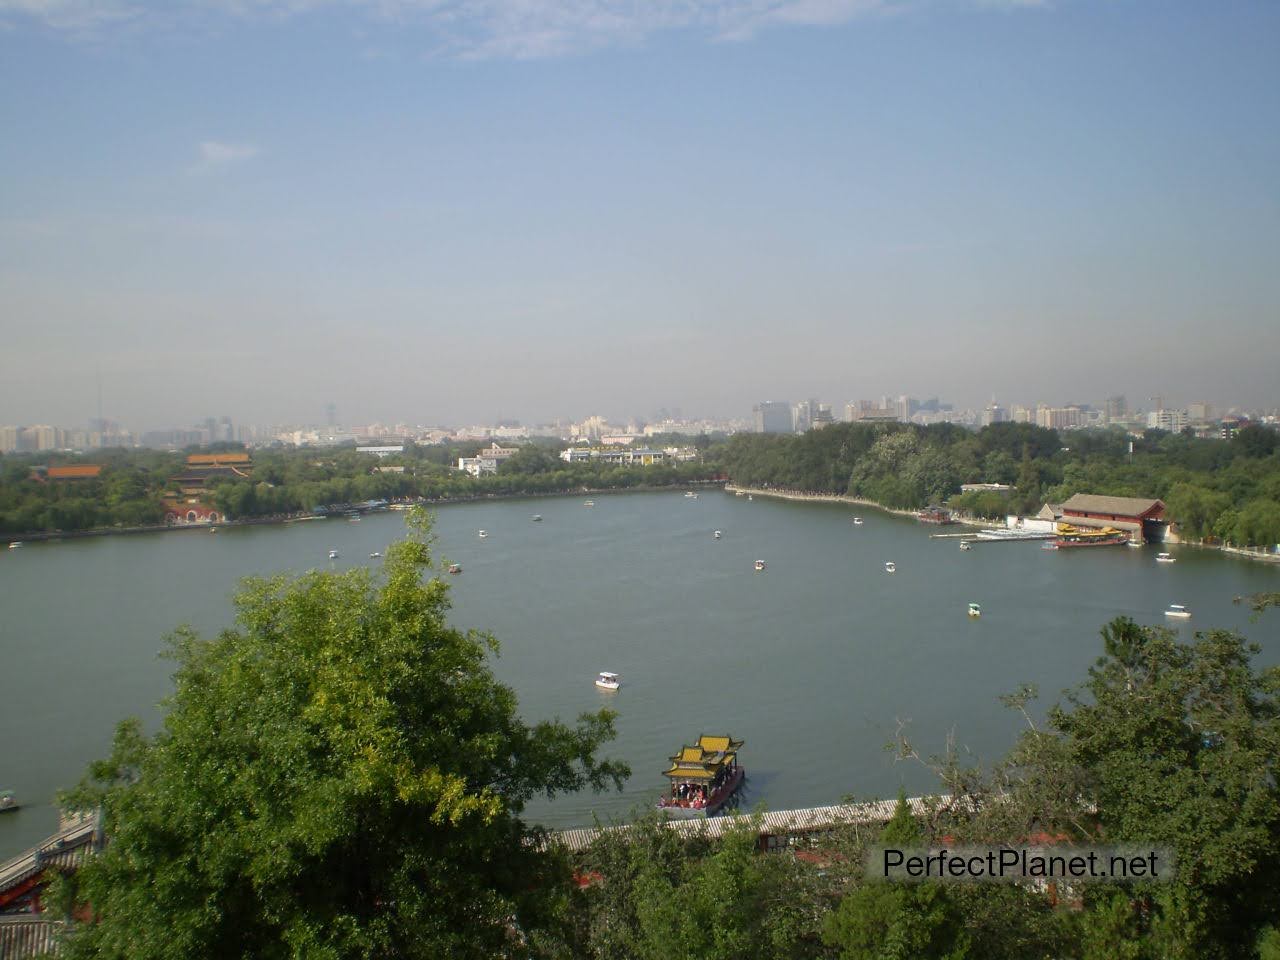 Beihai Park